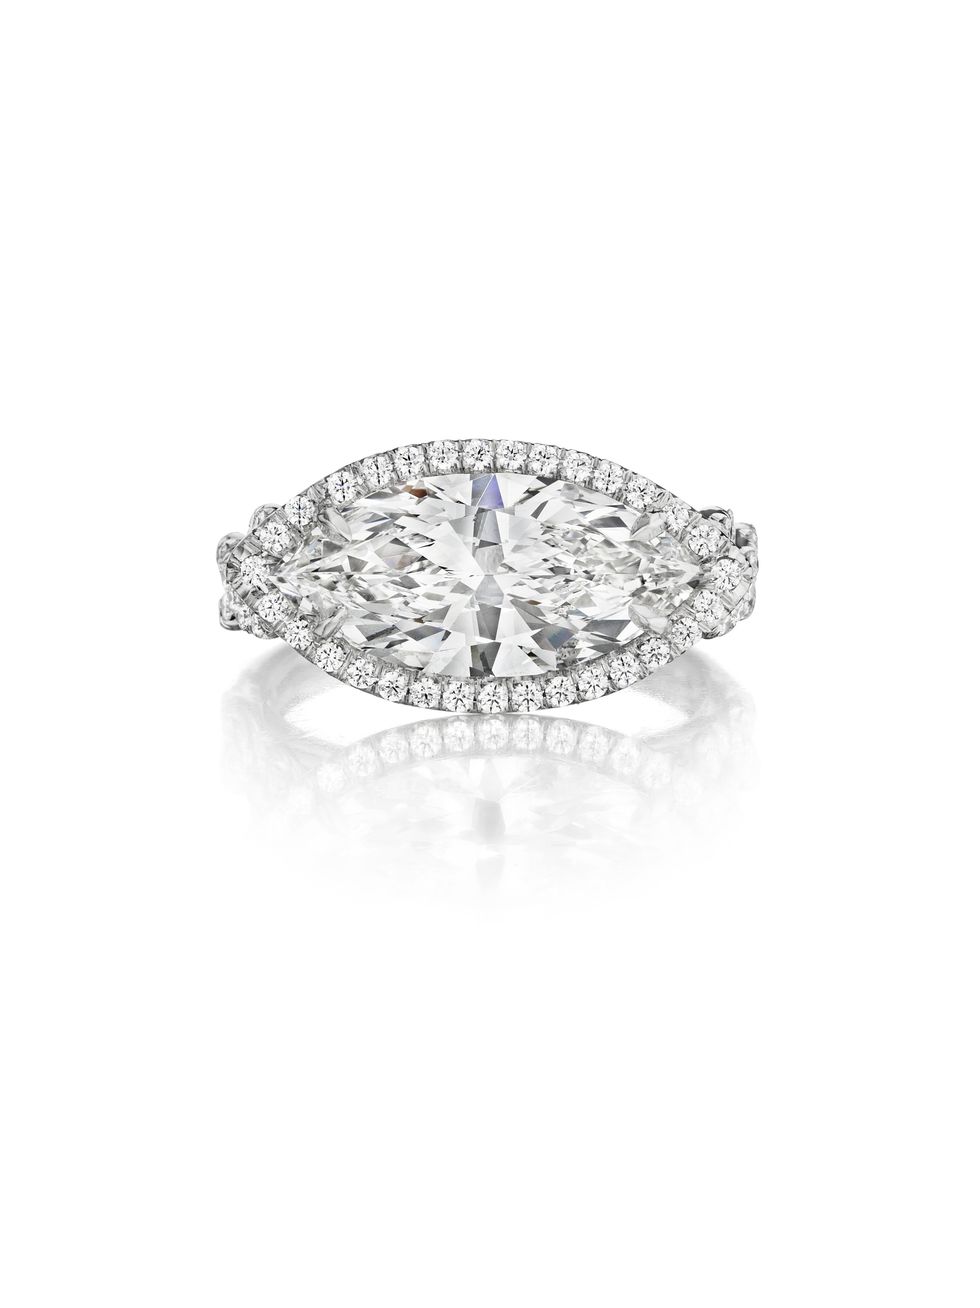 <p>Leo Ingwer Samara Platinum and Diamond Engagement Ring, Price upon request; <a href="http://www.leoingwer.com/">leoingwer.com</a></p>